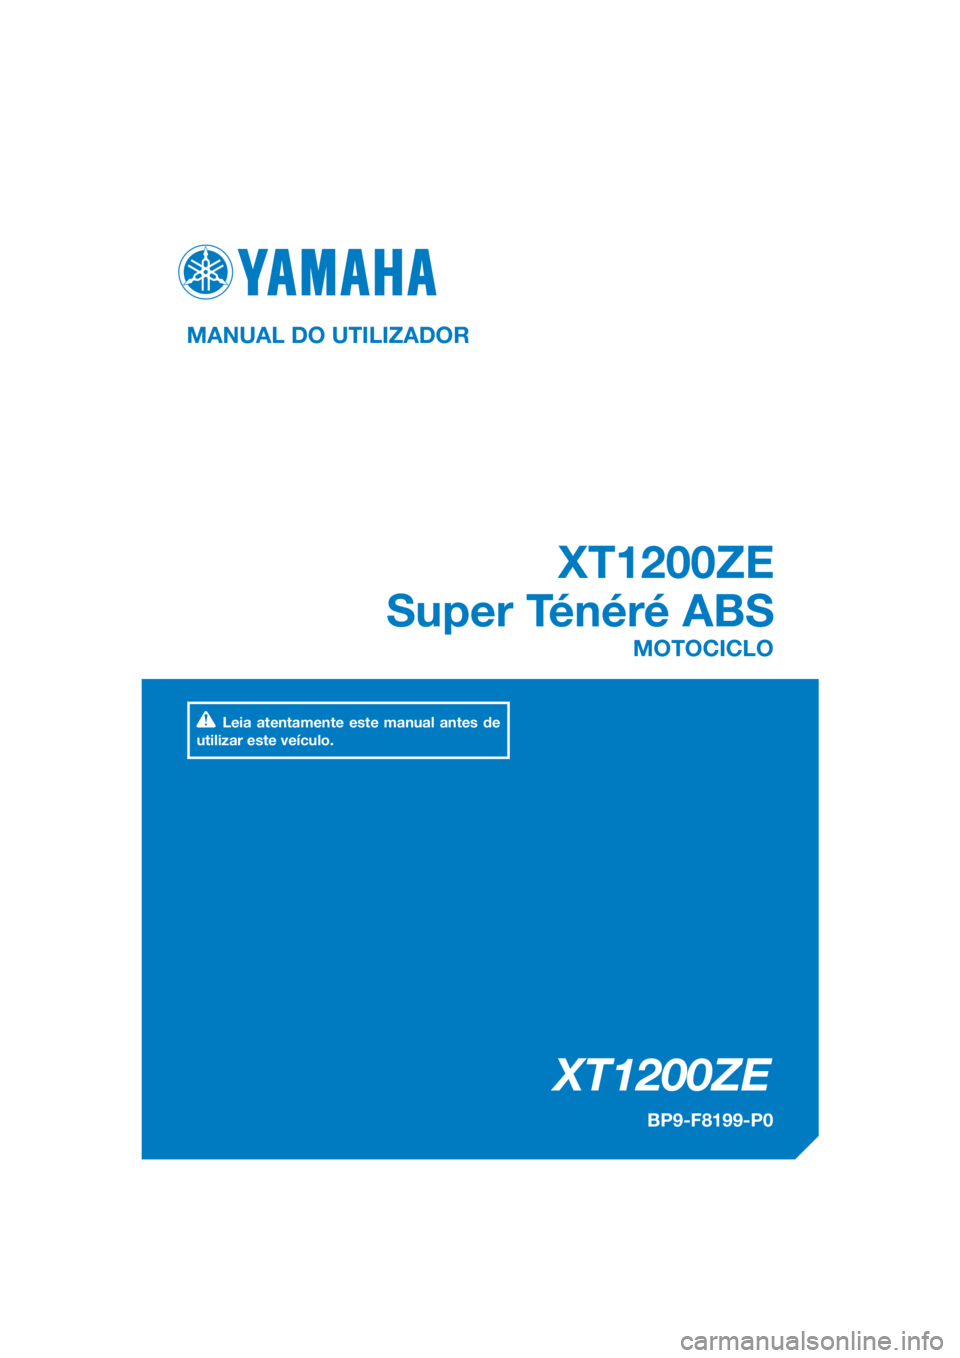 YAMAHA XT1200ZE 2017  Manual de utilização (in Portuguese) DIC183
XT1200ZE
XT1200ZE
Super Ténéré ABS
MANUAL DO UTILIZADOR
BP9-F8199-P0
MOTOCICLO
Leia atentamente este manual antes de 
utilizar este veículo.
[Portuguese  (P)] 